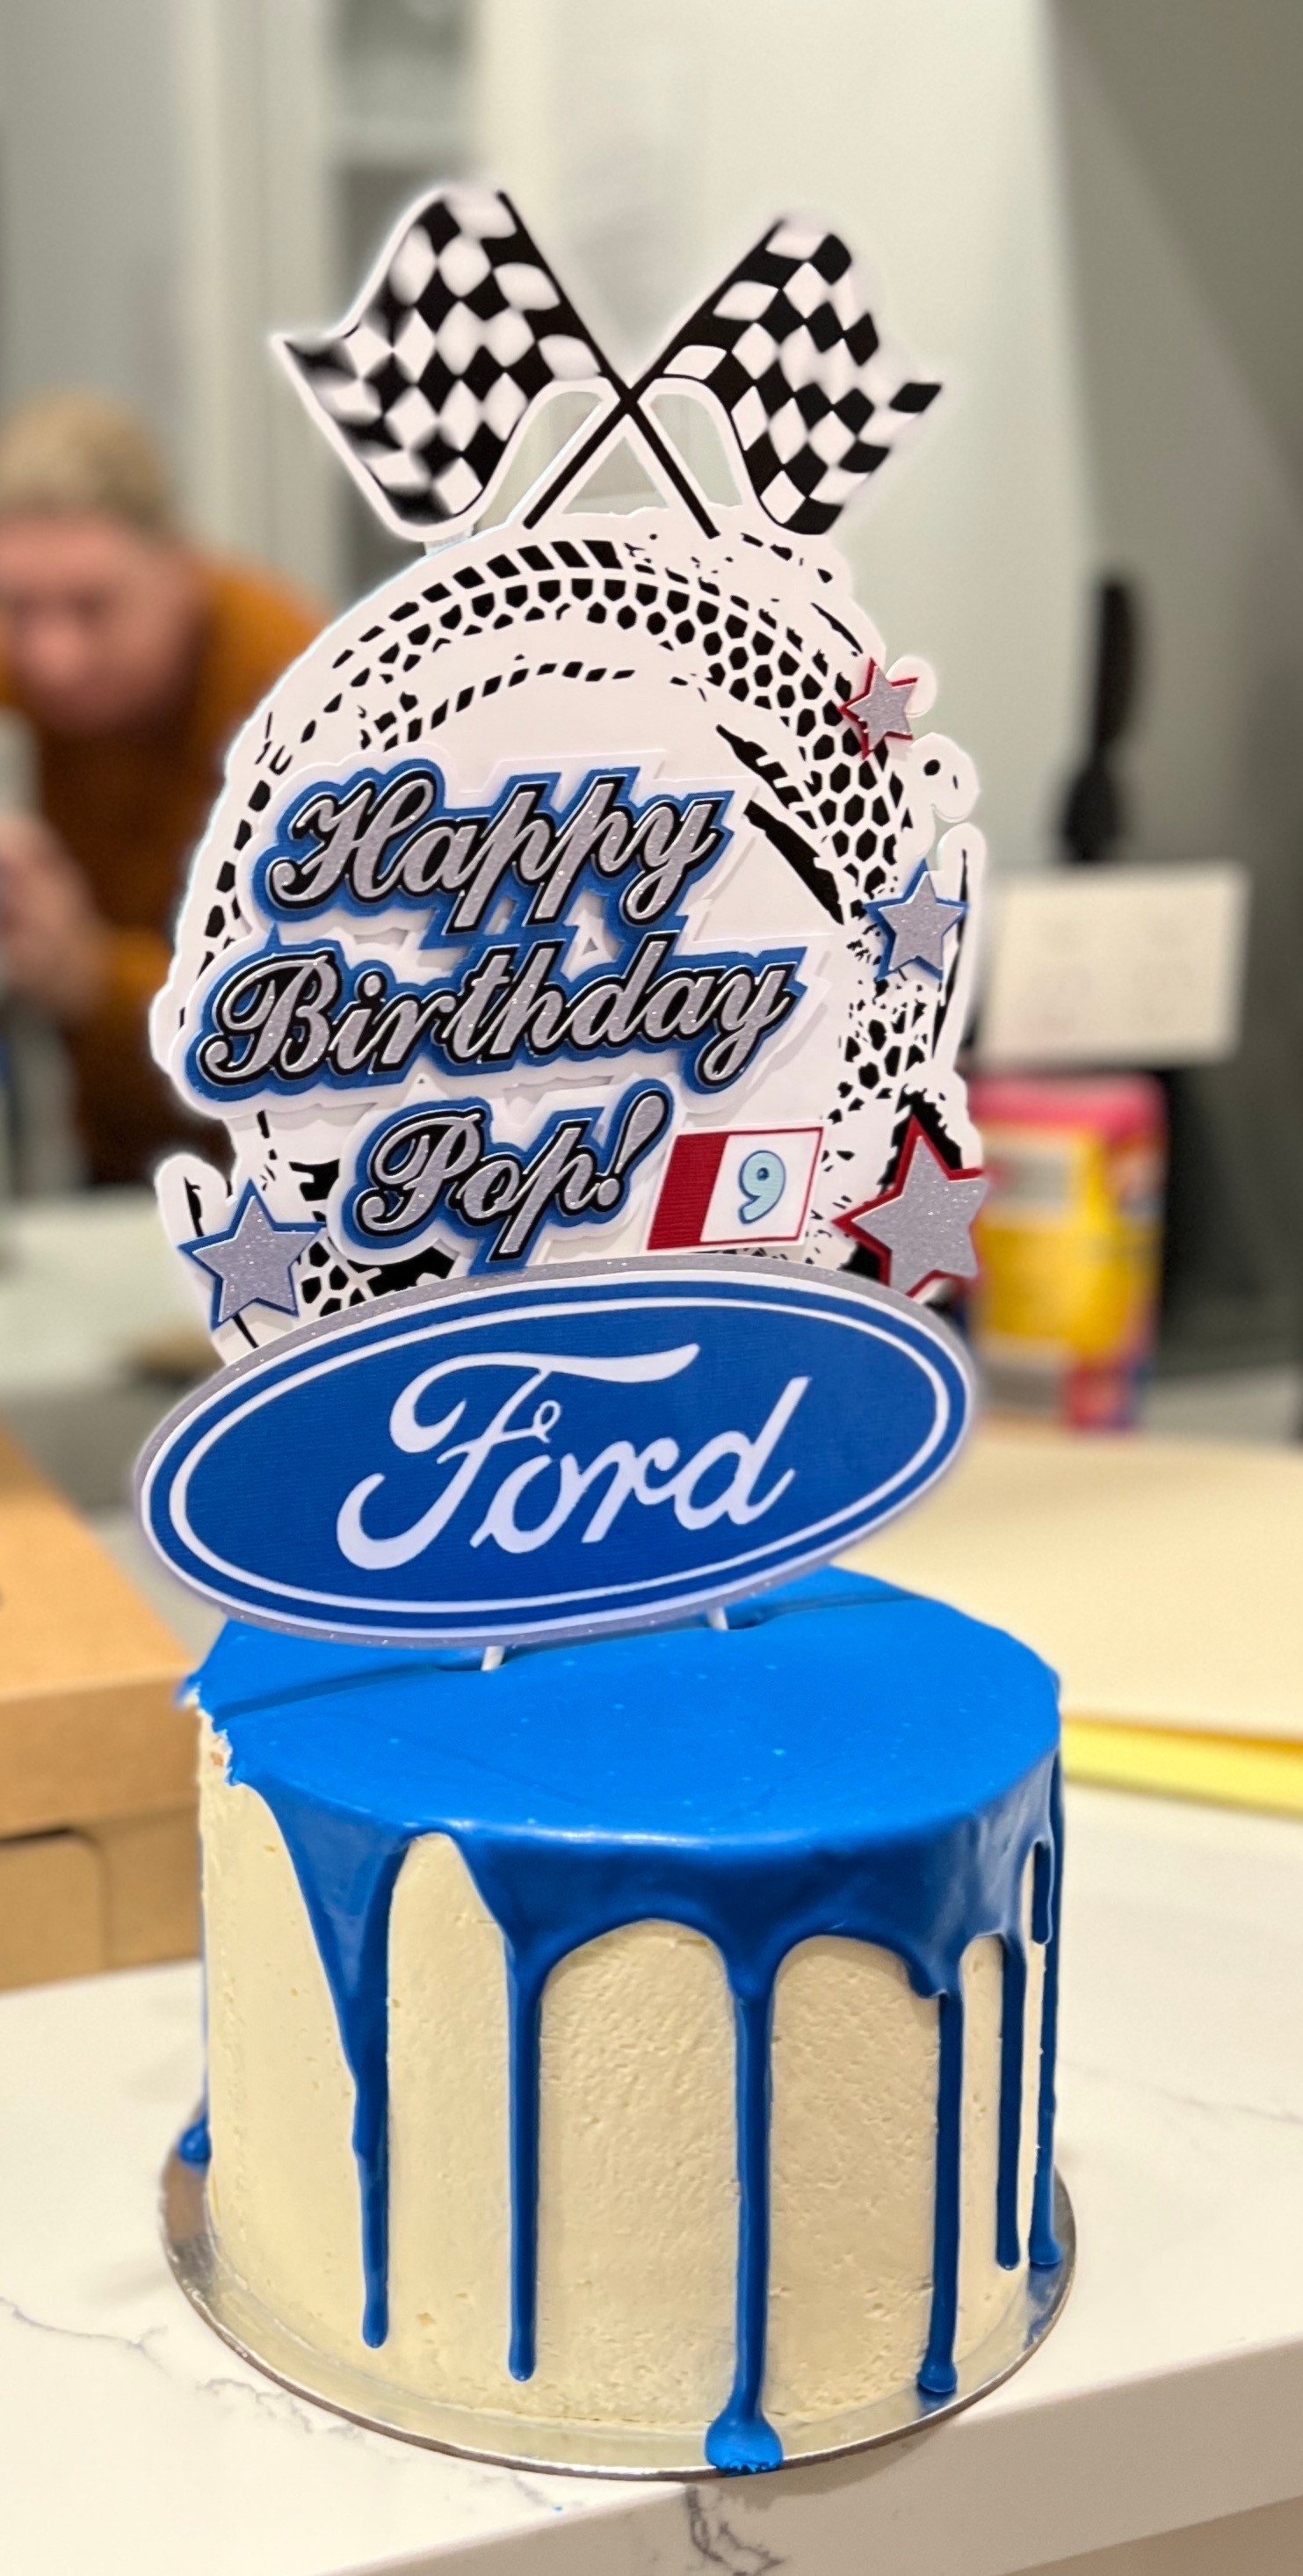 Ford Logo Car Company Blue White Oval Edible Cake Topper Image